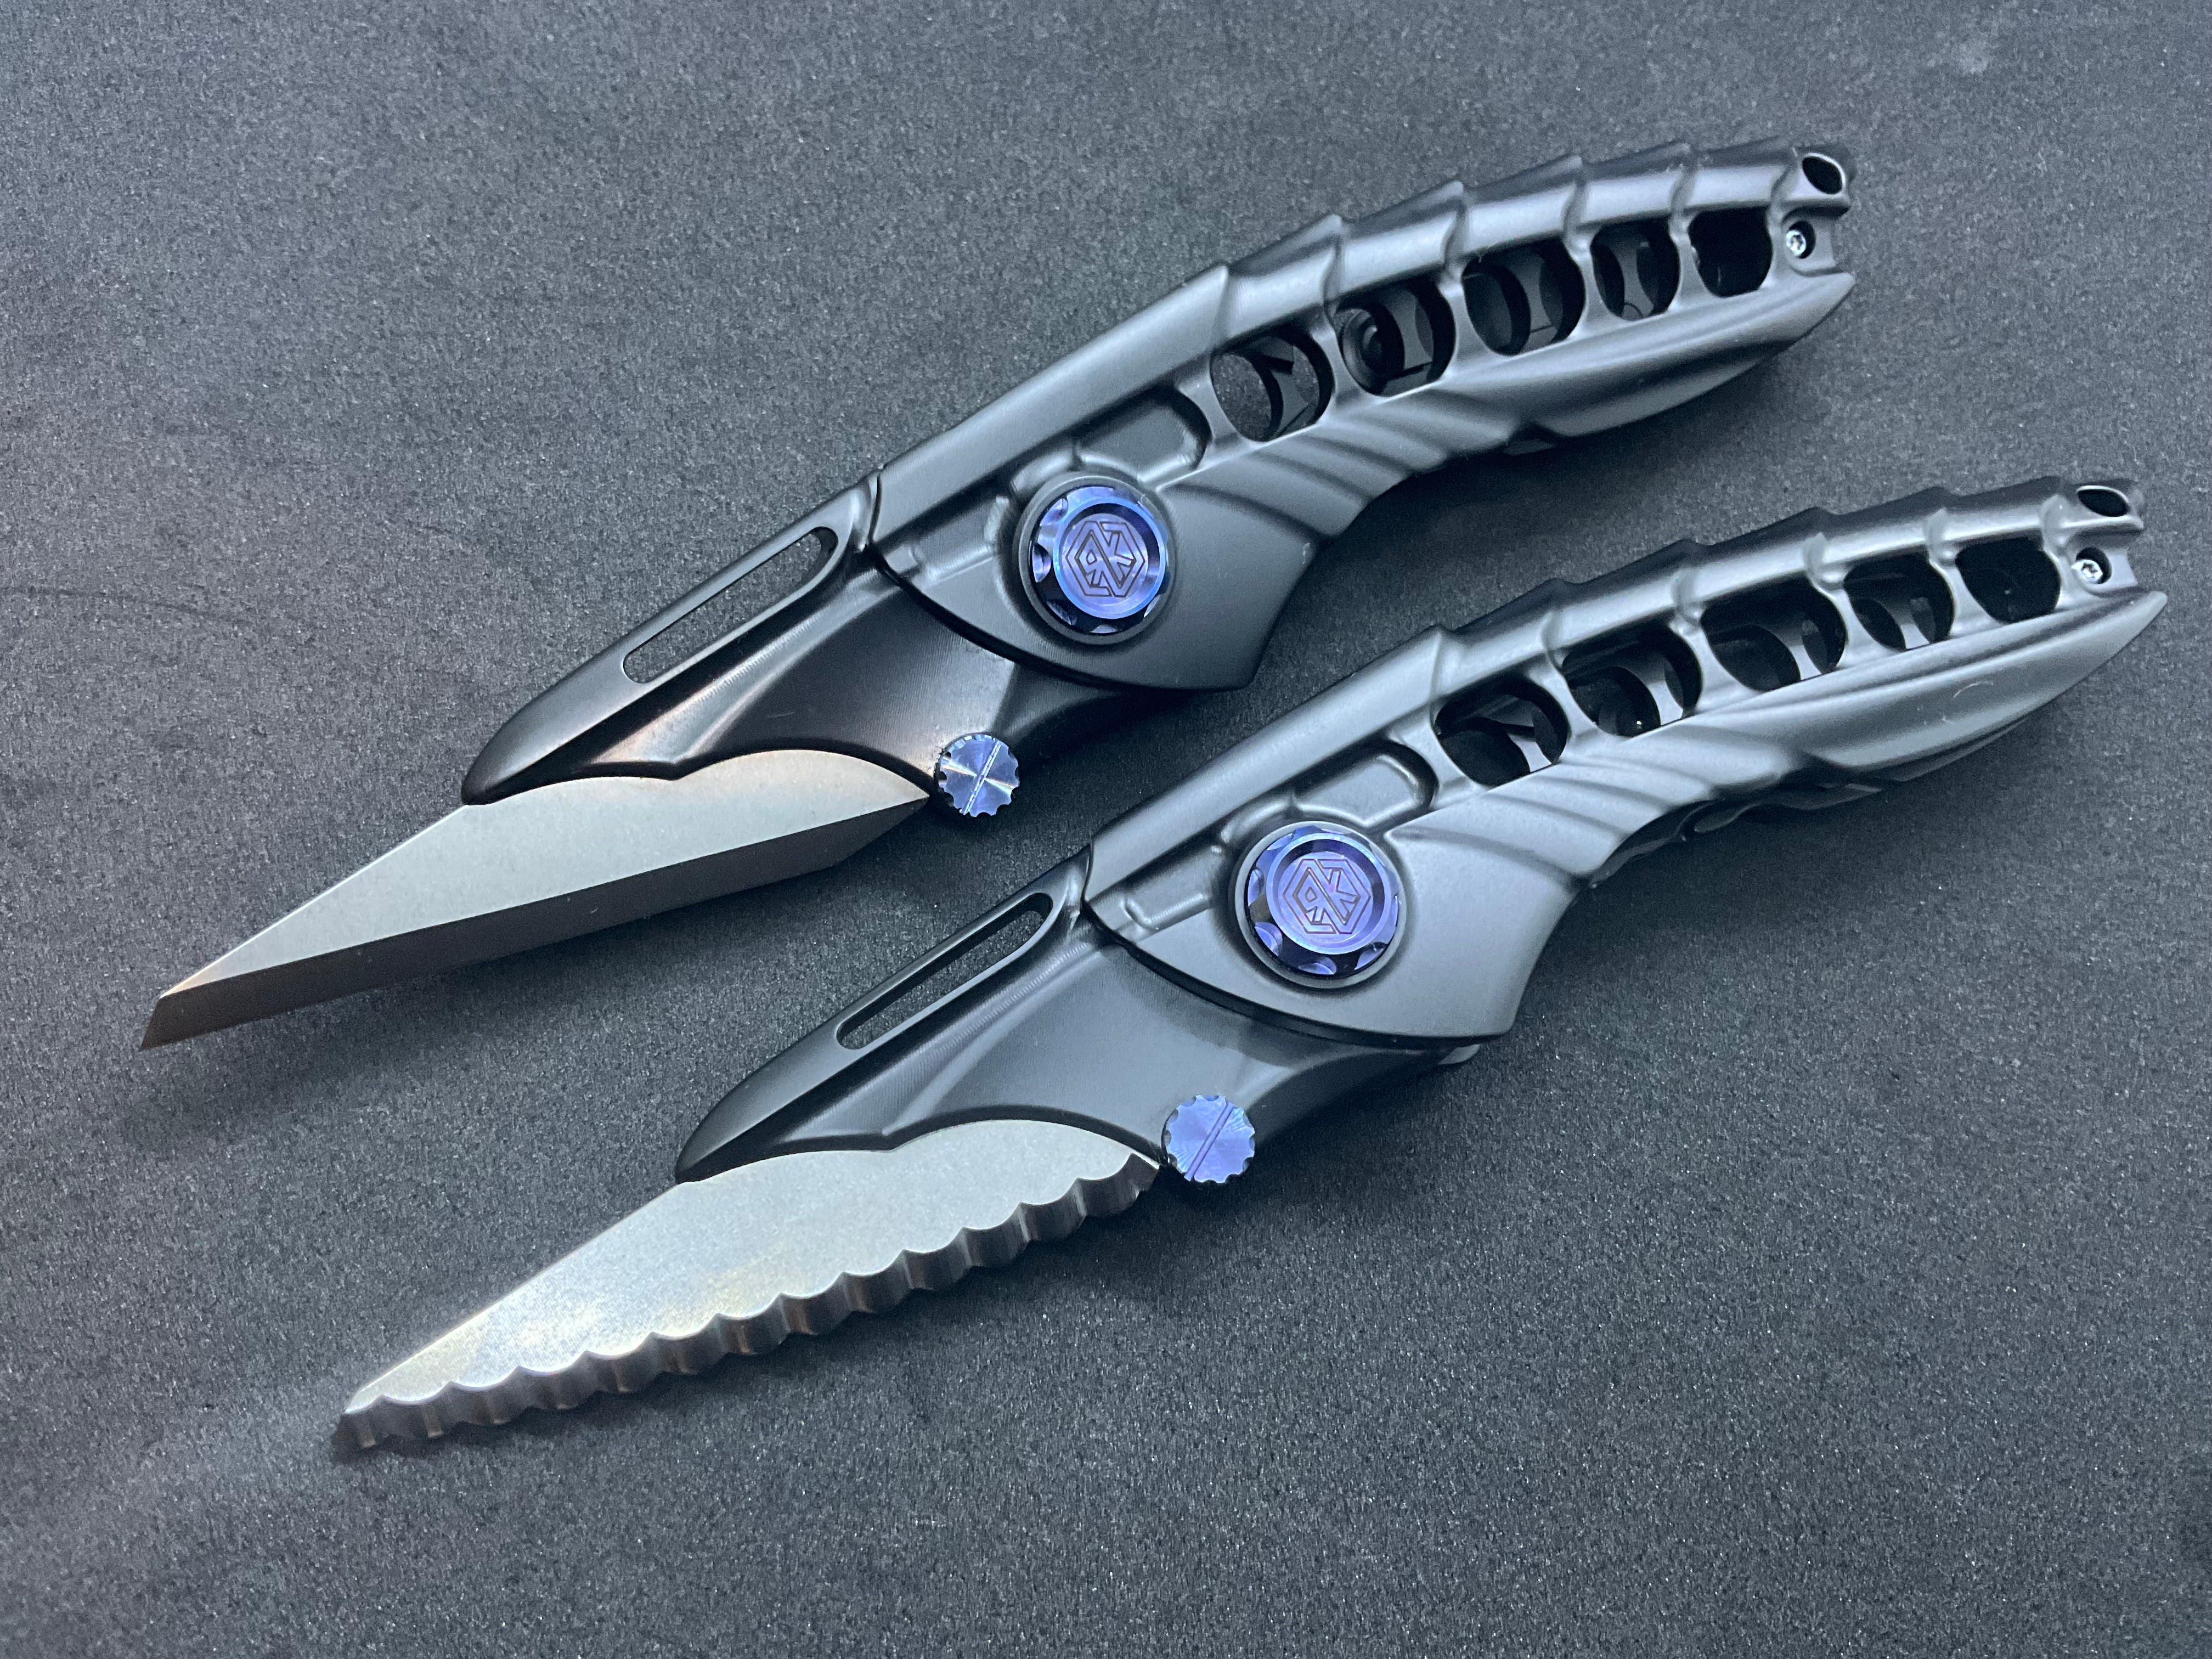 Rike Knife - Alien 1 + Fully Serrated Blade (updated version)